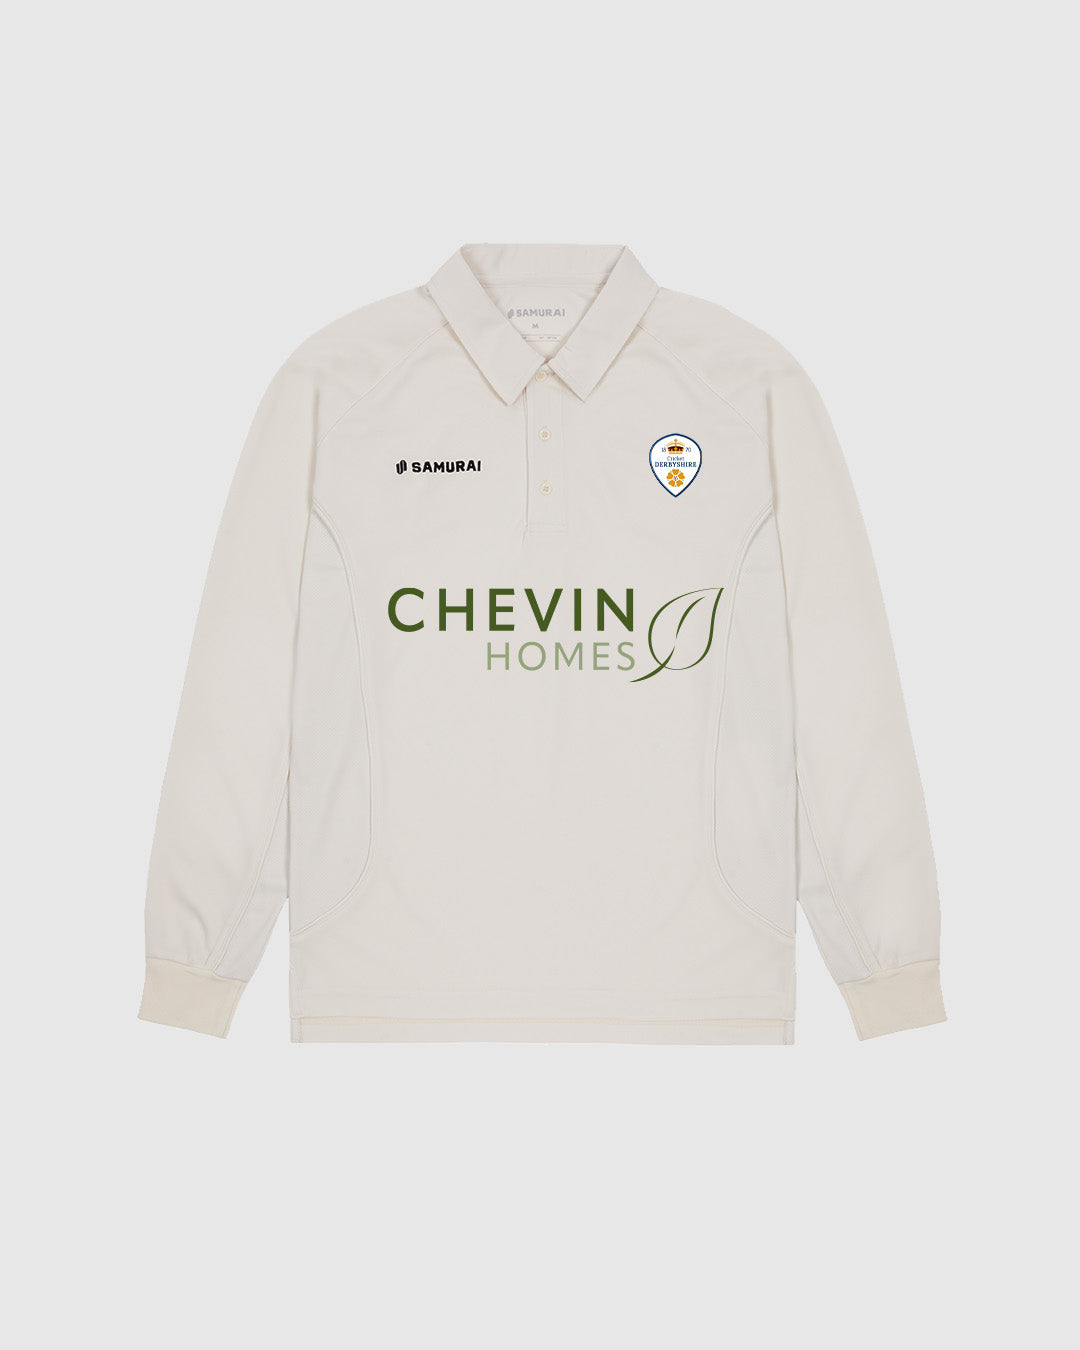 Derbyshire CCC - EP:0131 - Cricket Long Sleeve Shirt